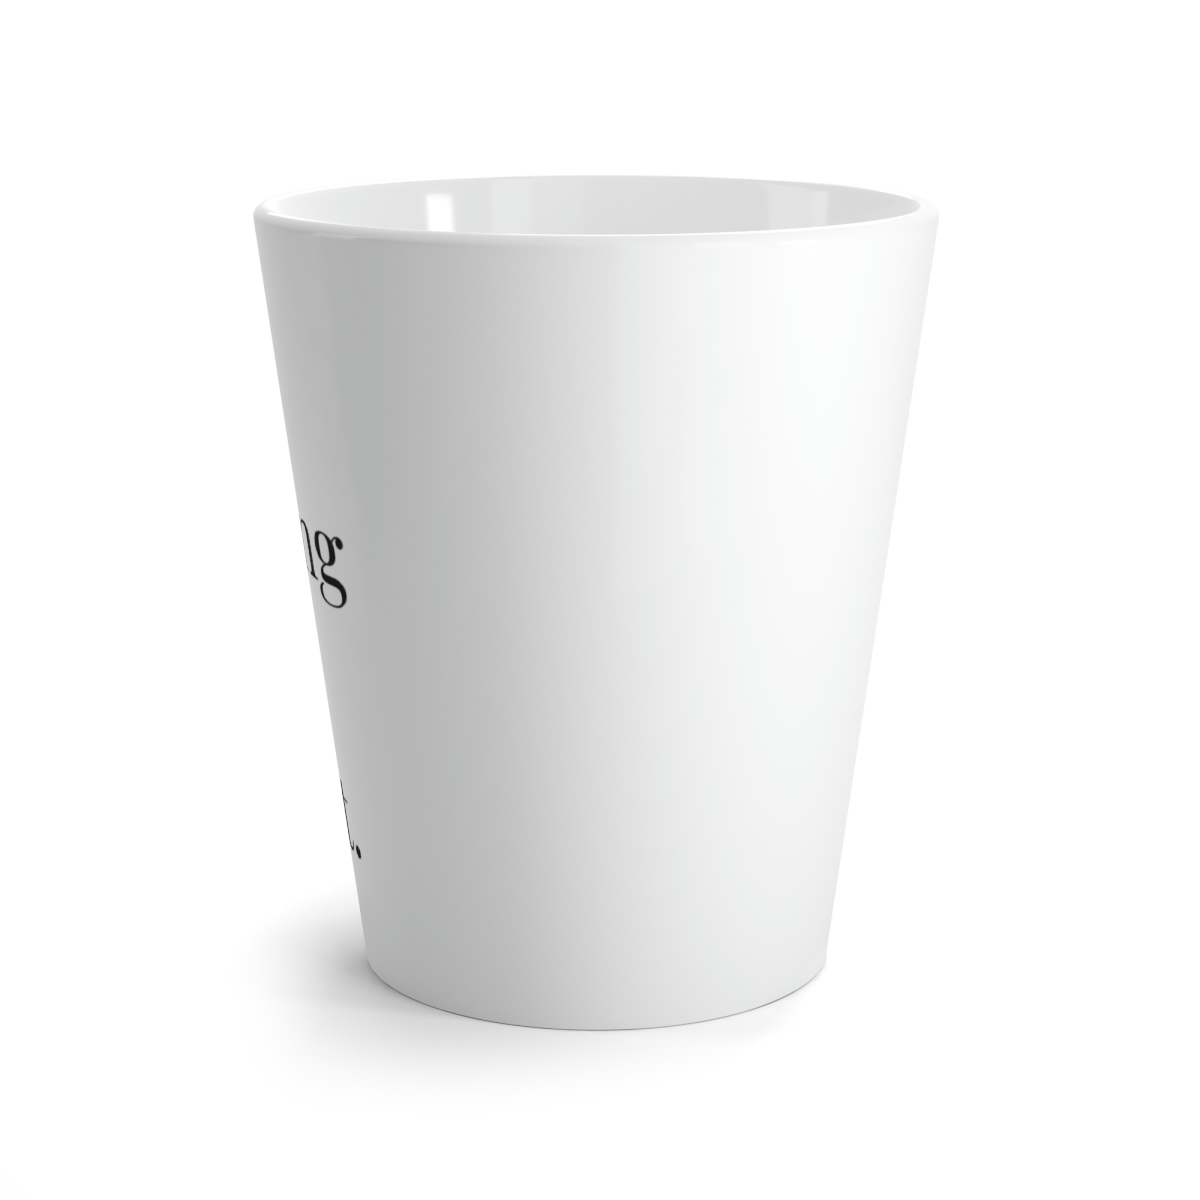 "I'm doing my best" Latte Mug